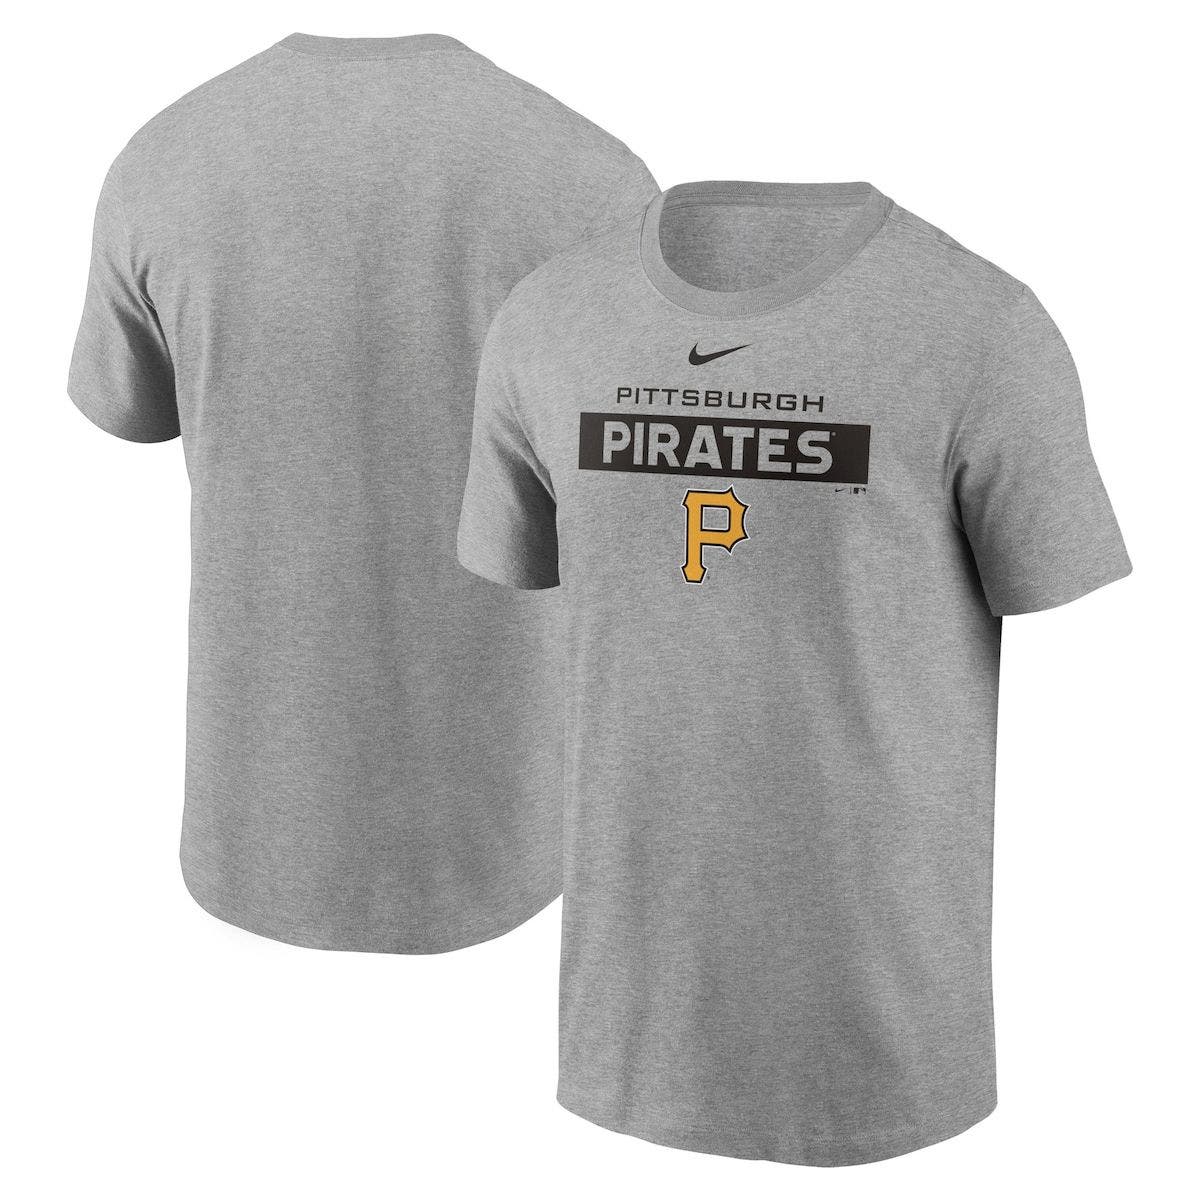 Men's Nike Heathered Gray Pittsburgh Pirates Team T-Shirt in Heather Gray